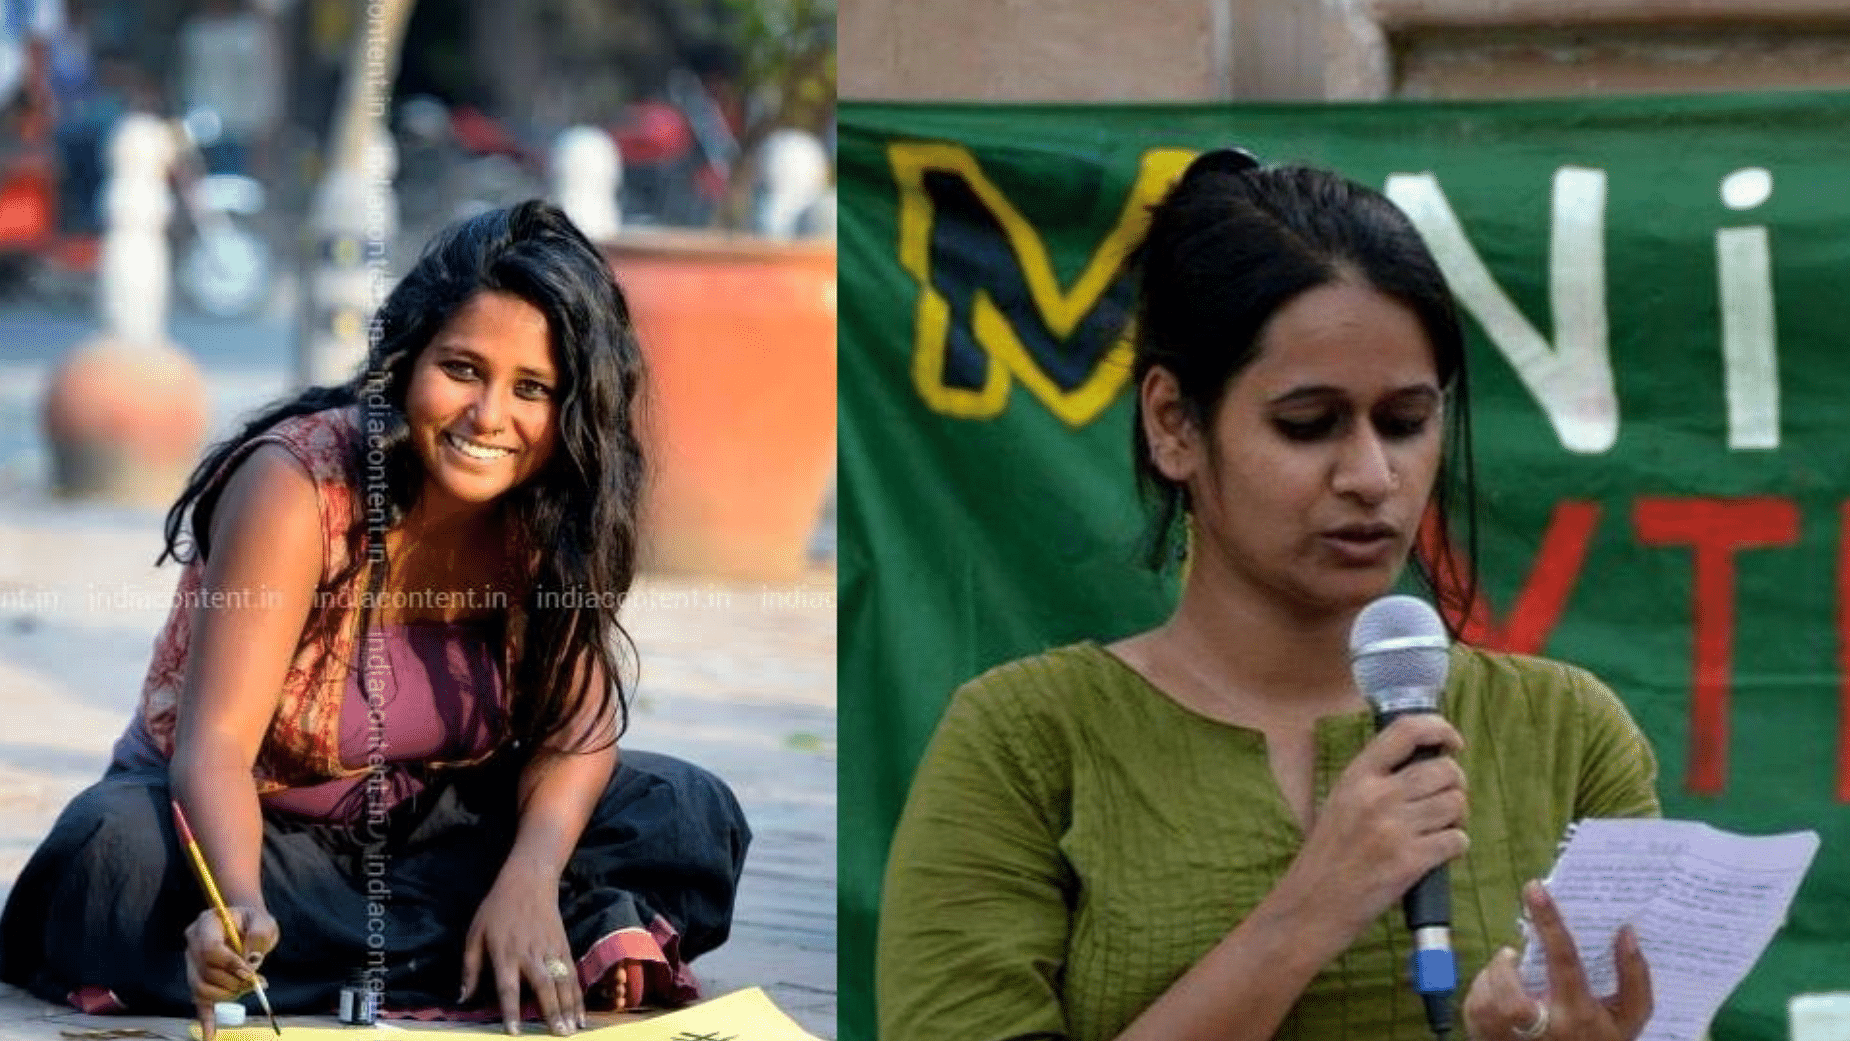 The two activists – Devangana Kalita (30) and Natasha Narwal (32) – are students of Jawaharlal Nehru University.